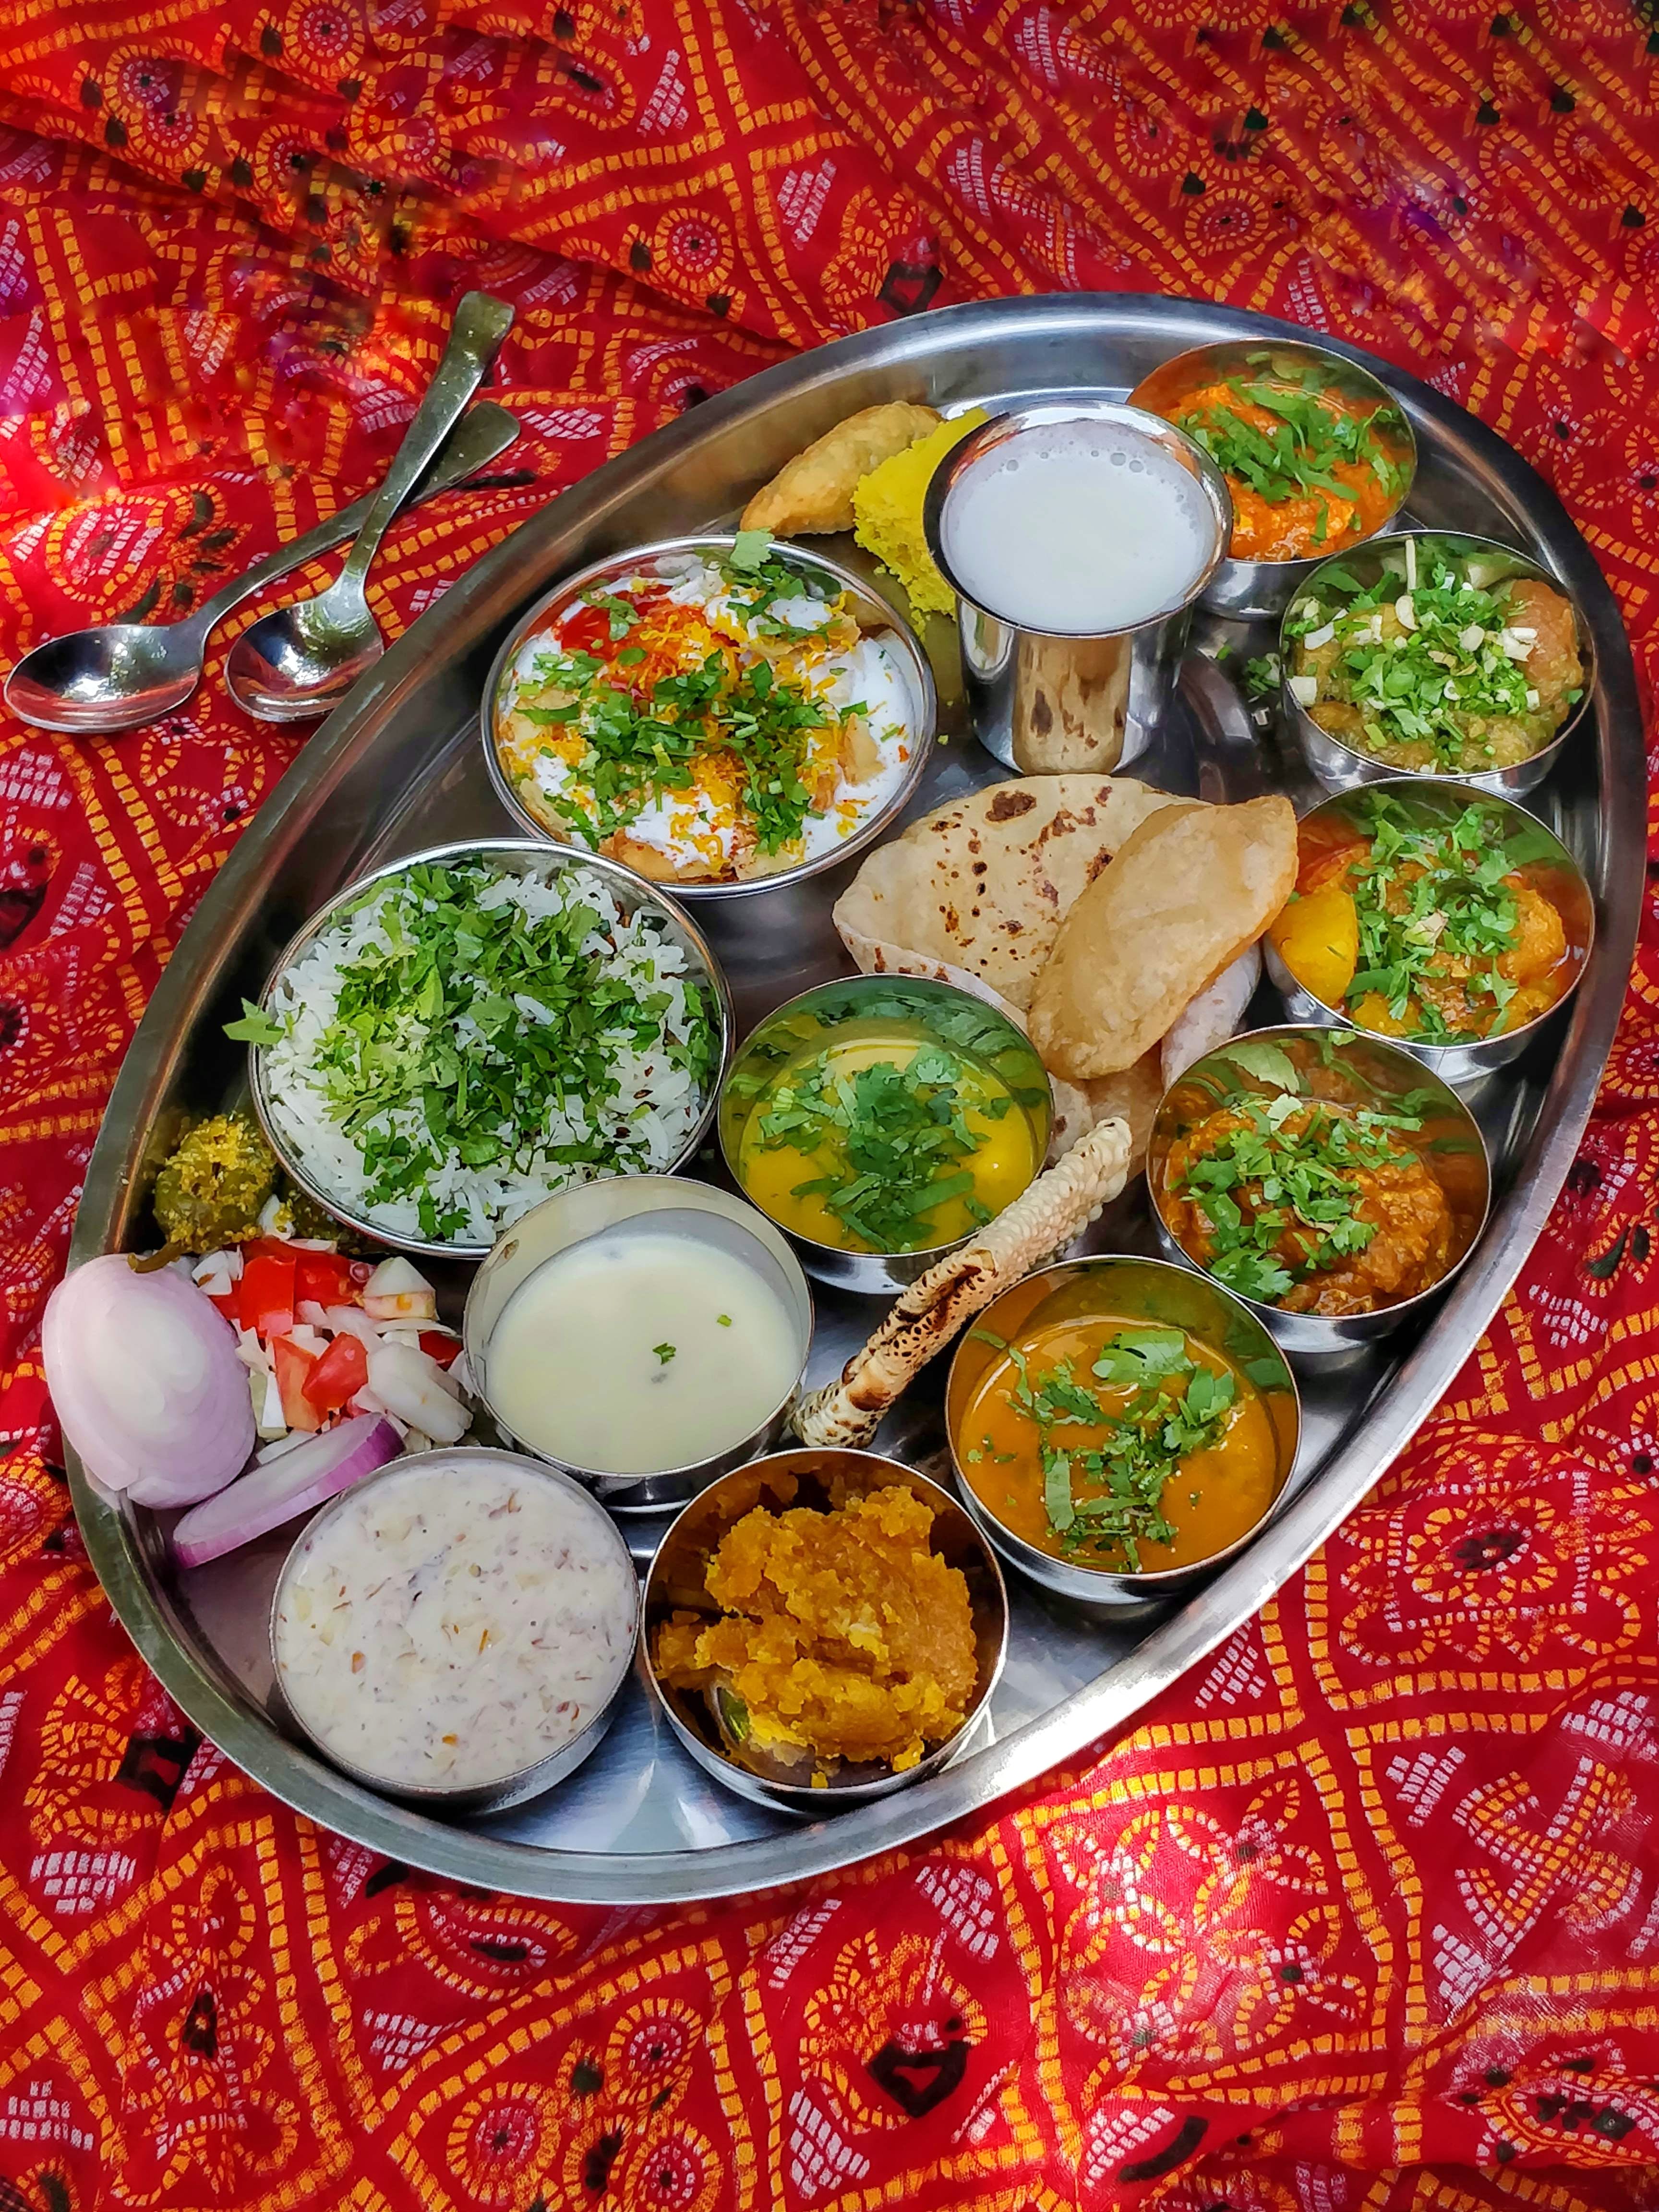 Dish,Food,Cuisine,Meal,Ingredient,Vegetarian food,Produce,Indian cuisine,Comfort food,Platter